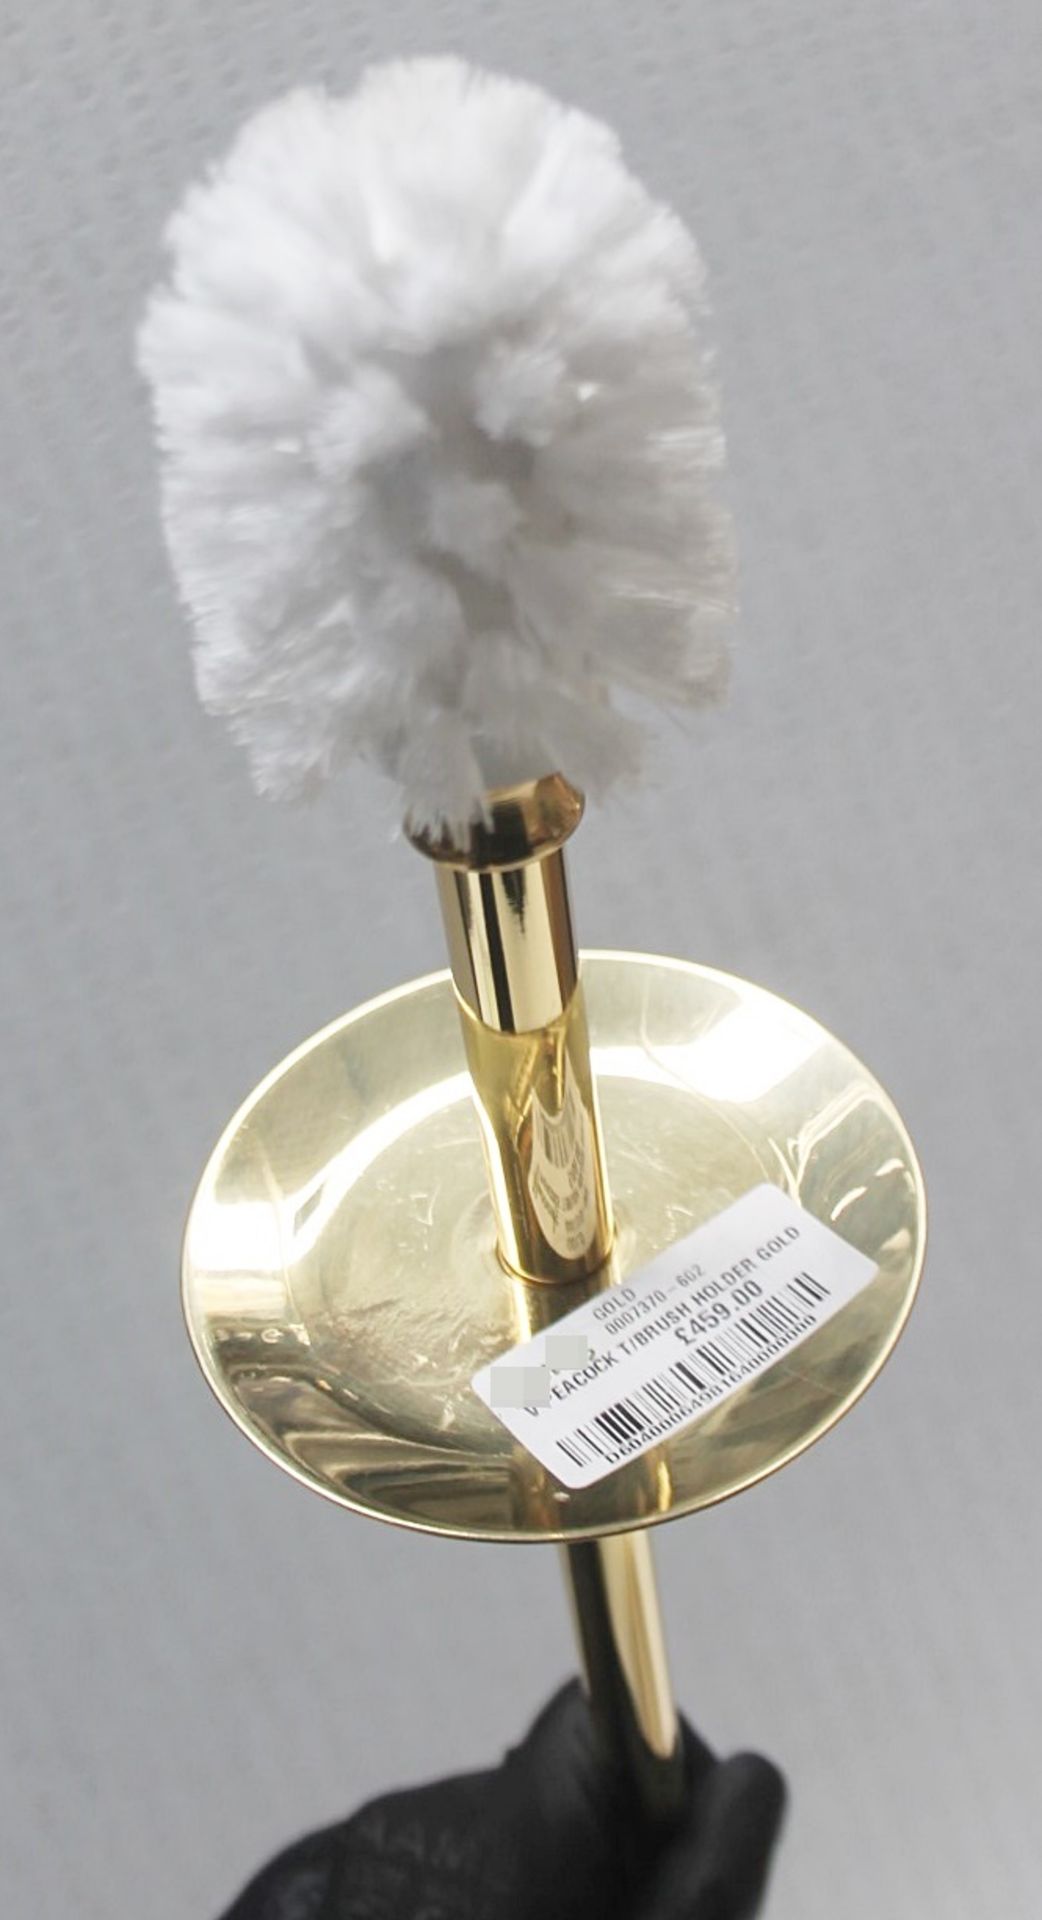 1 x VILLARI 'Peacock' Opulent 24-karat Gold Decorated Porcelain Toilet Brush Holder - RRP £459.00 - Image 8 of 9